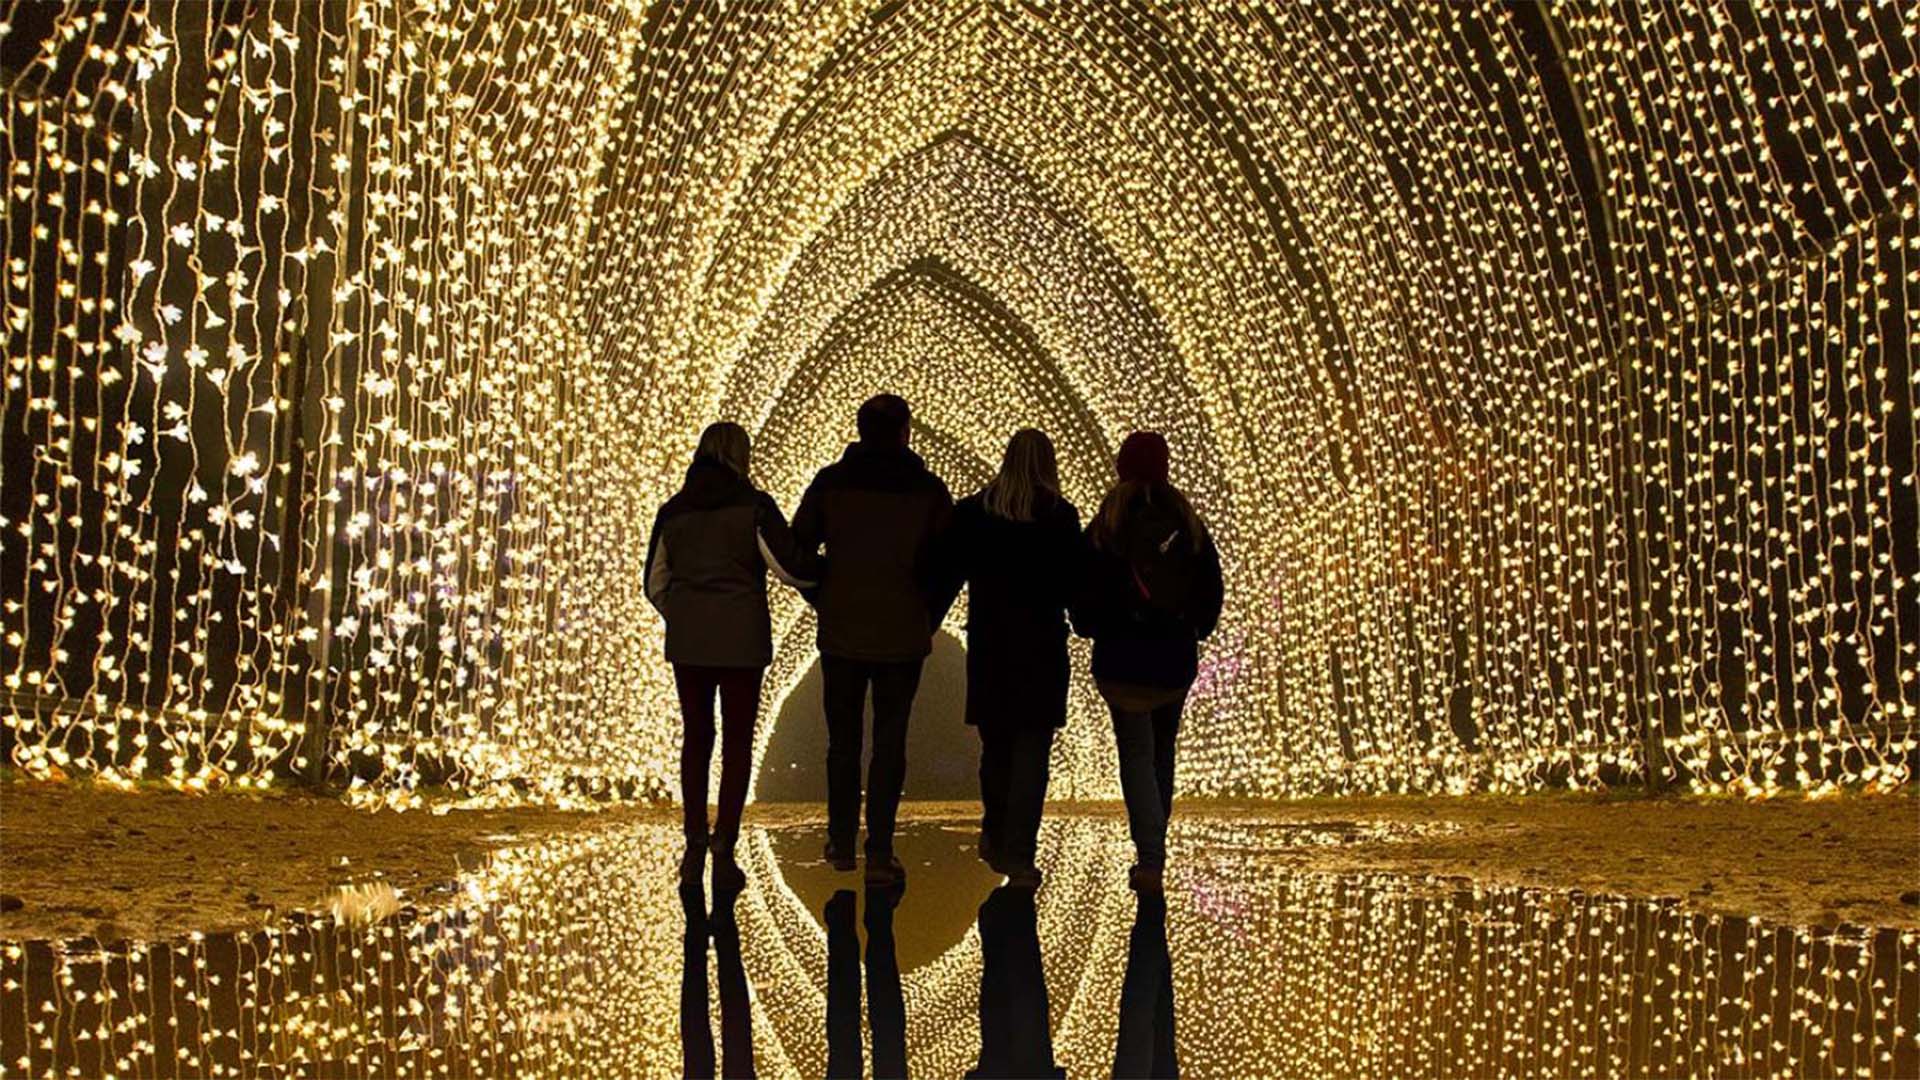 Chicago Botanic Garden's holiday lights